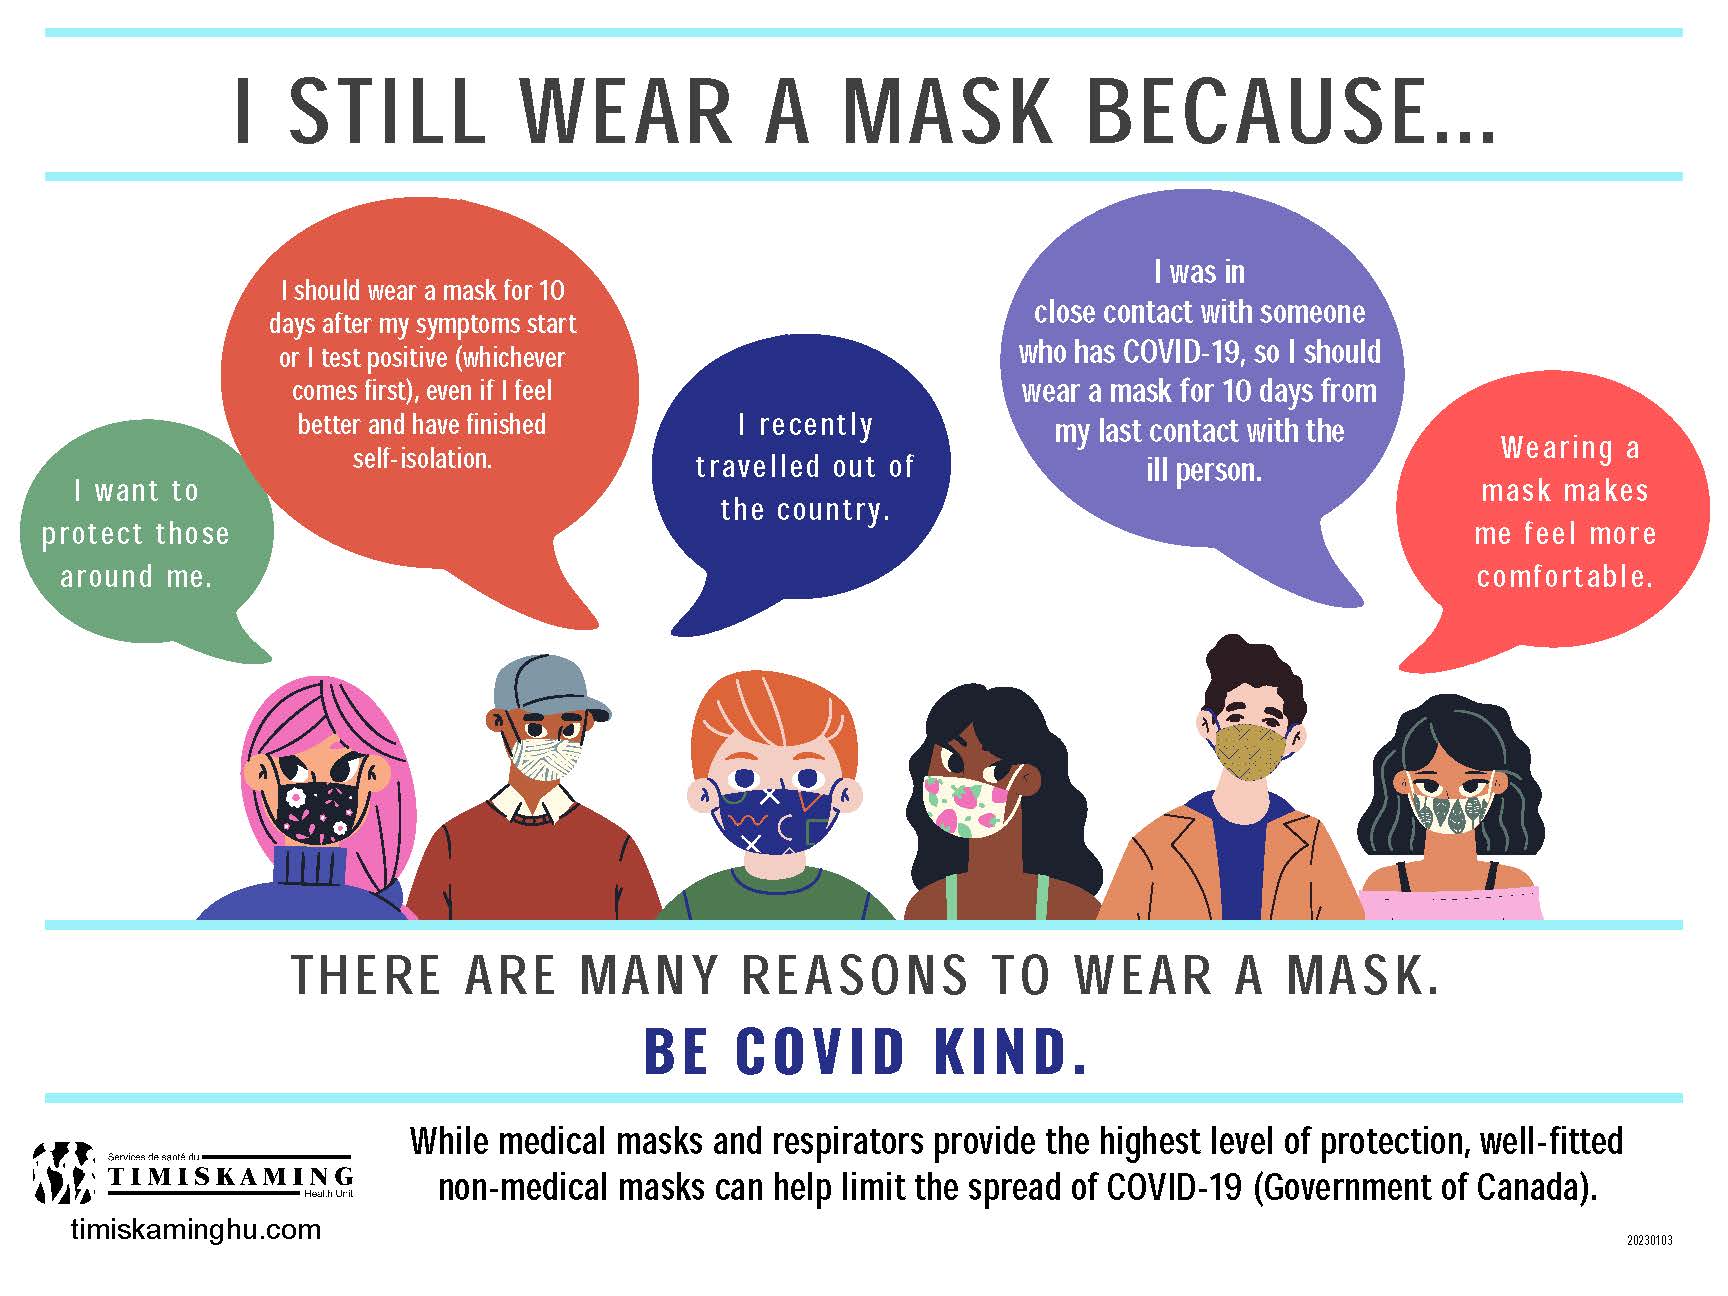 I still wear a mask because...